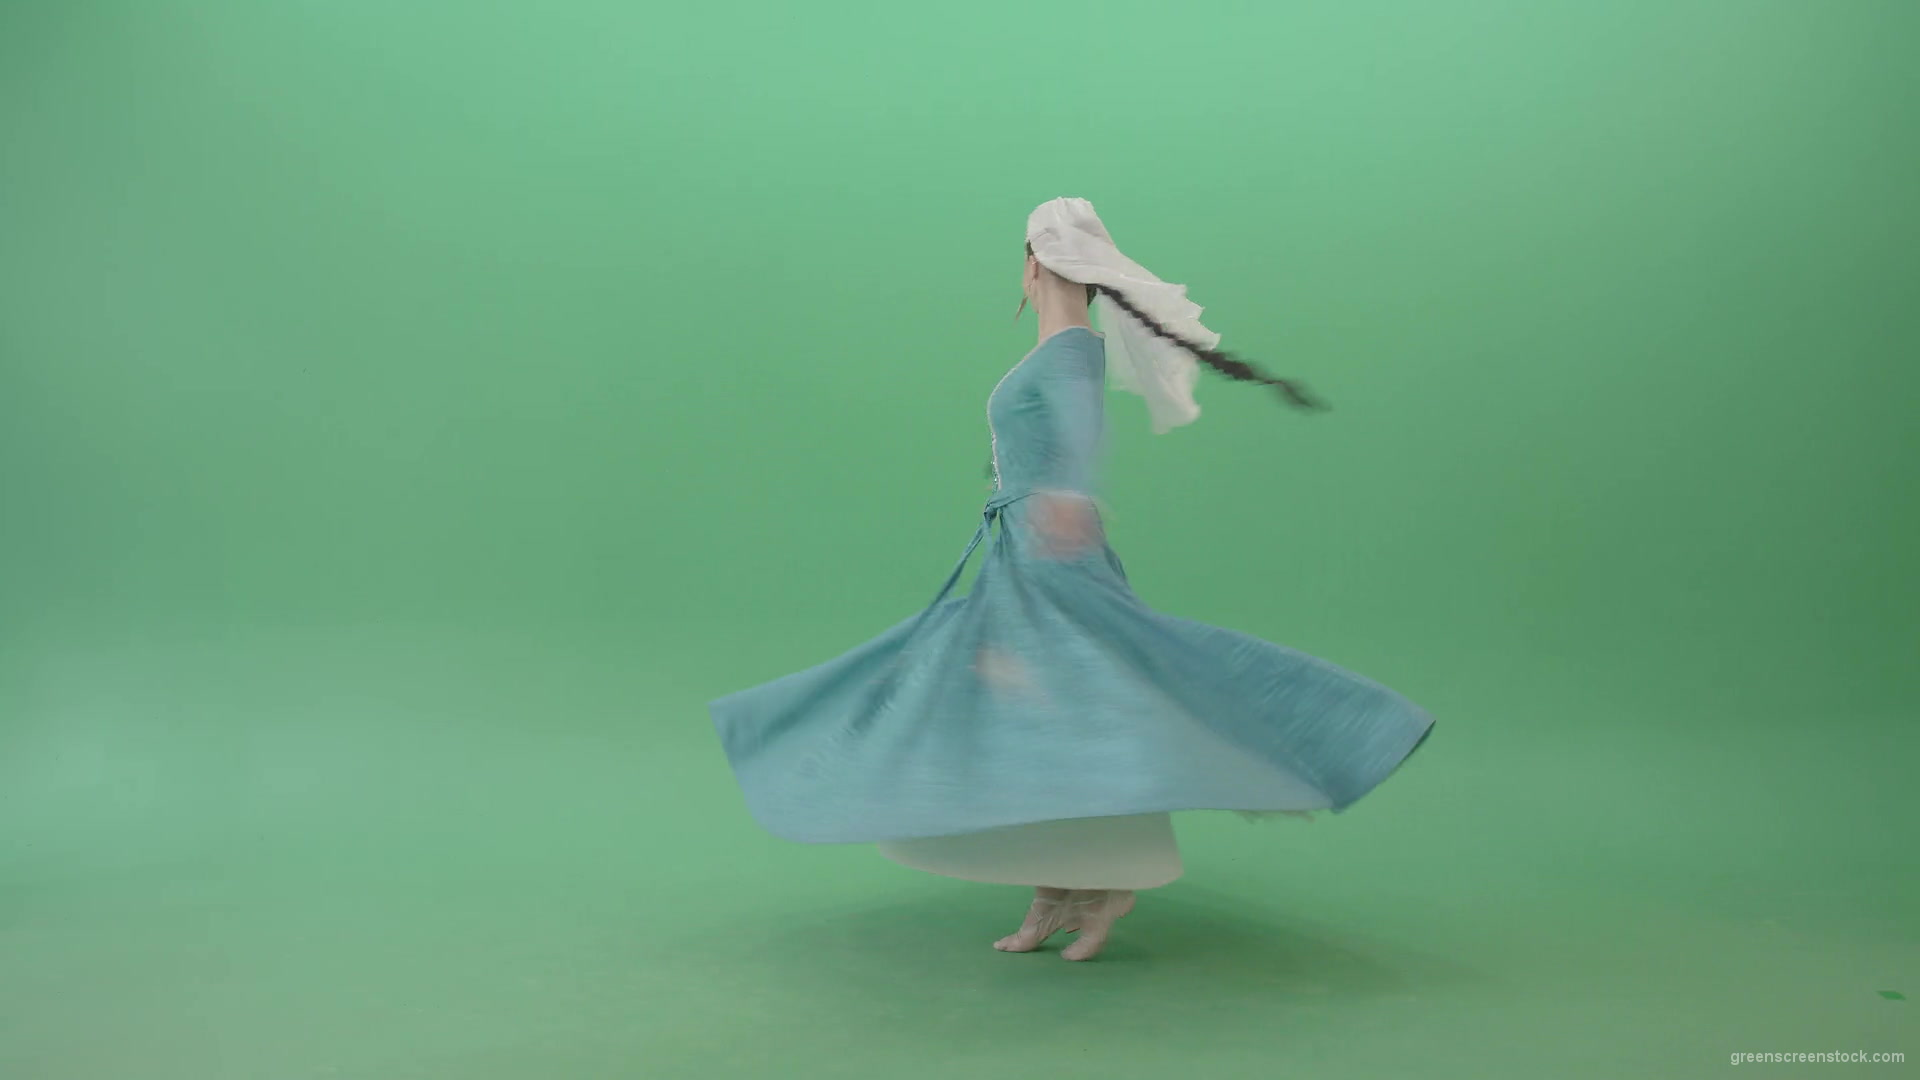 Iberian-Colchis-Woman-spinning-Georgian-Perkhuli-dance-in-blue-dress-isolated-on-Green-Screen-4K-Video-Footage-1920_004 Green Screen Stock